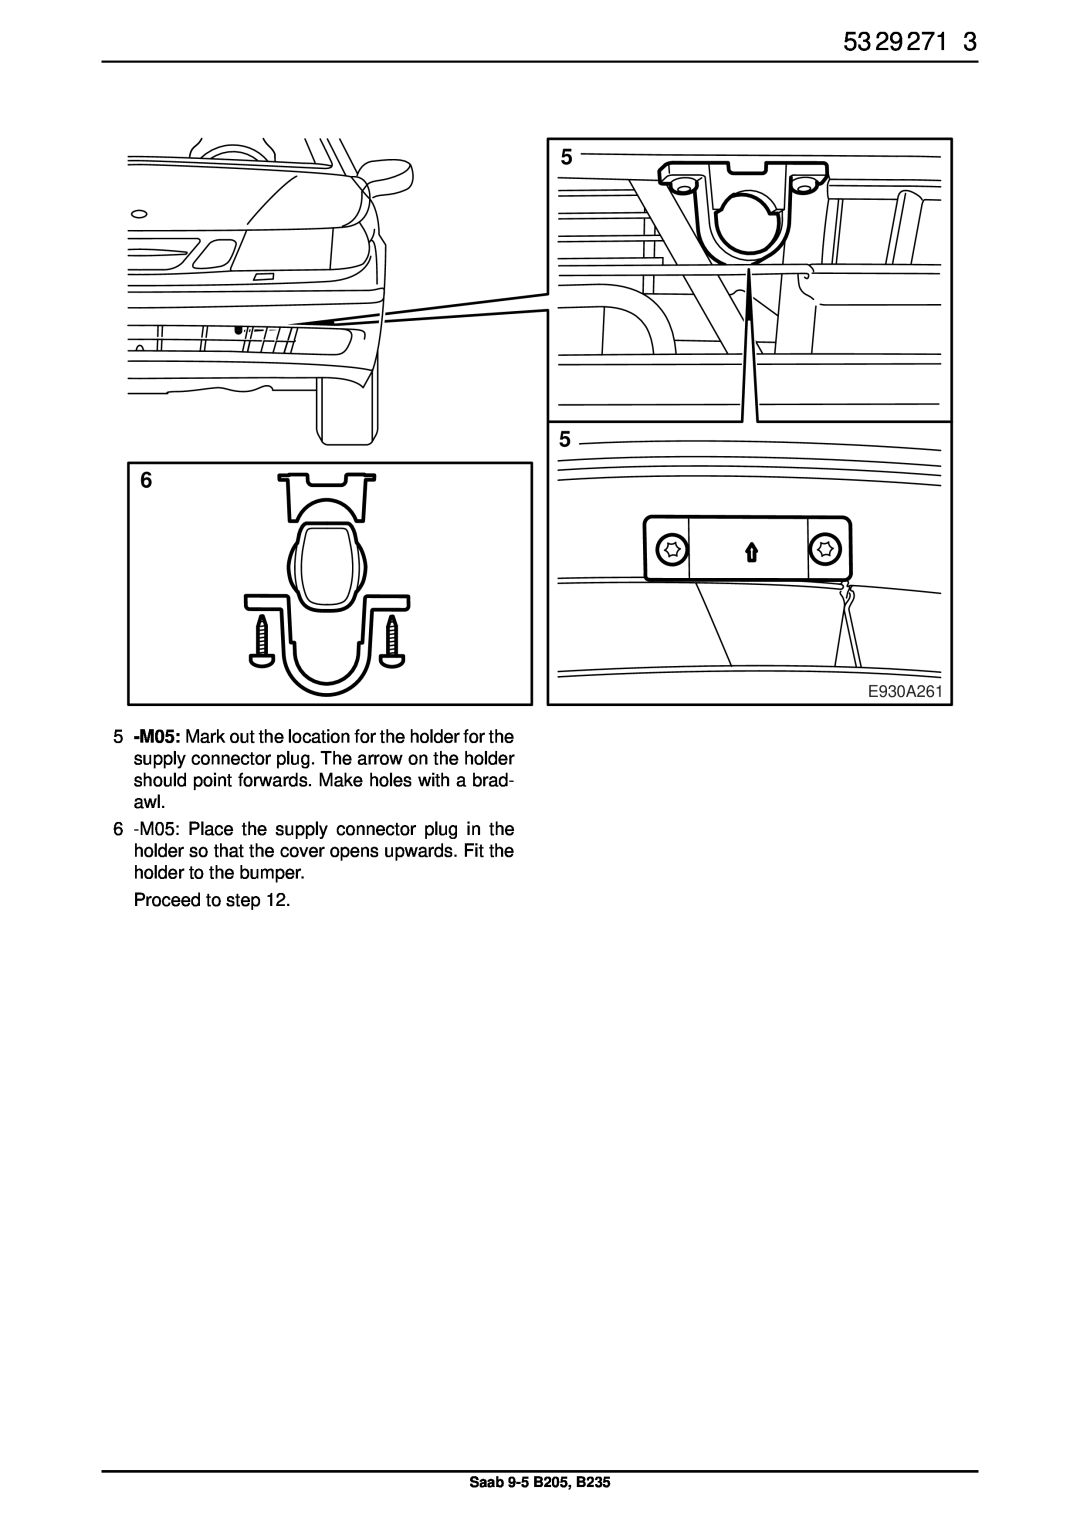 Saab B205, B235 installation instructions Proceed to step 